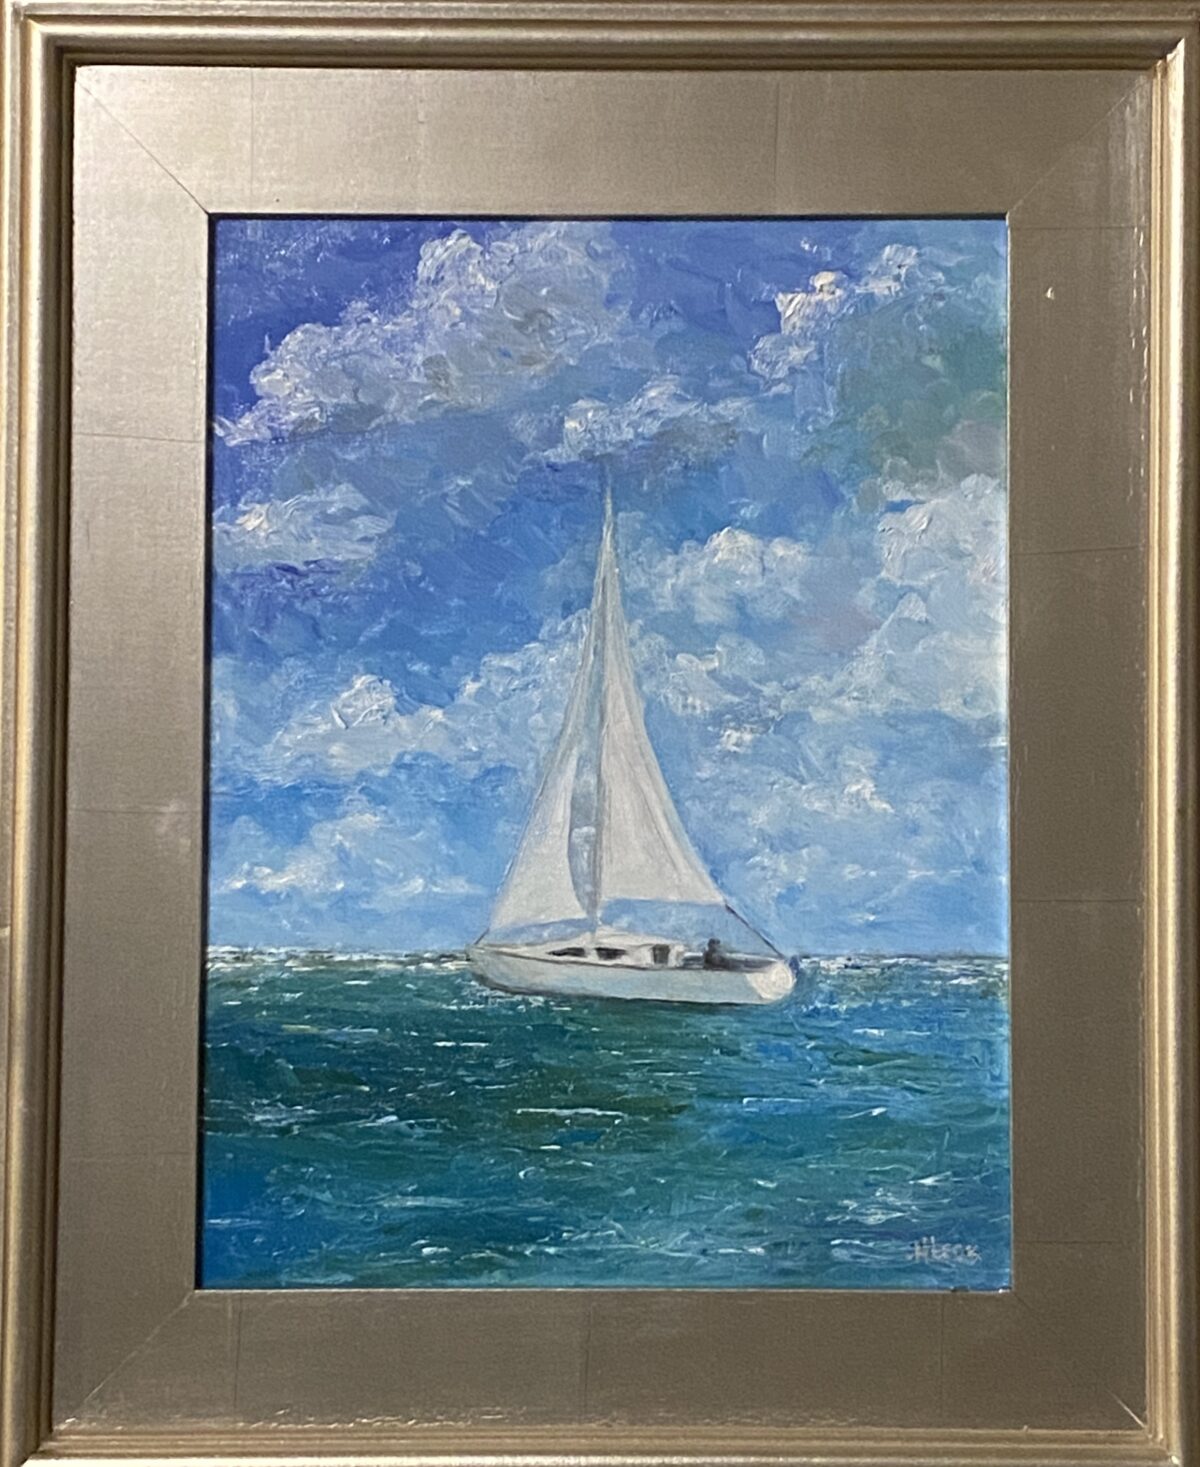 242 - Sailing in the Clouds - 12x16 - Landscape - $275